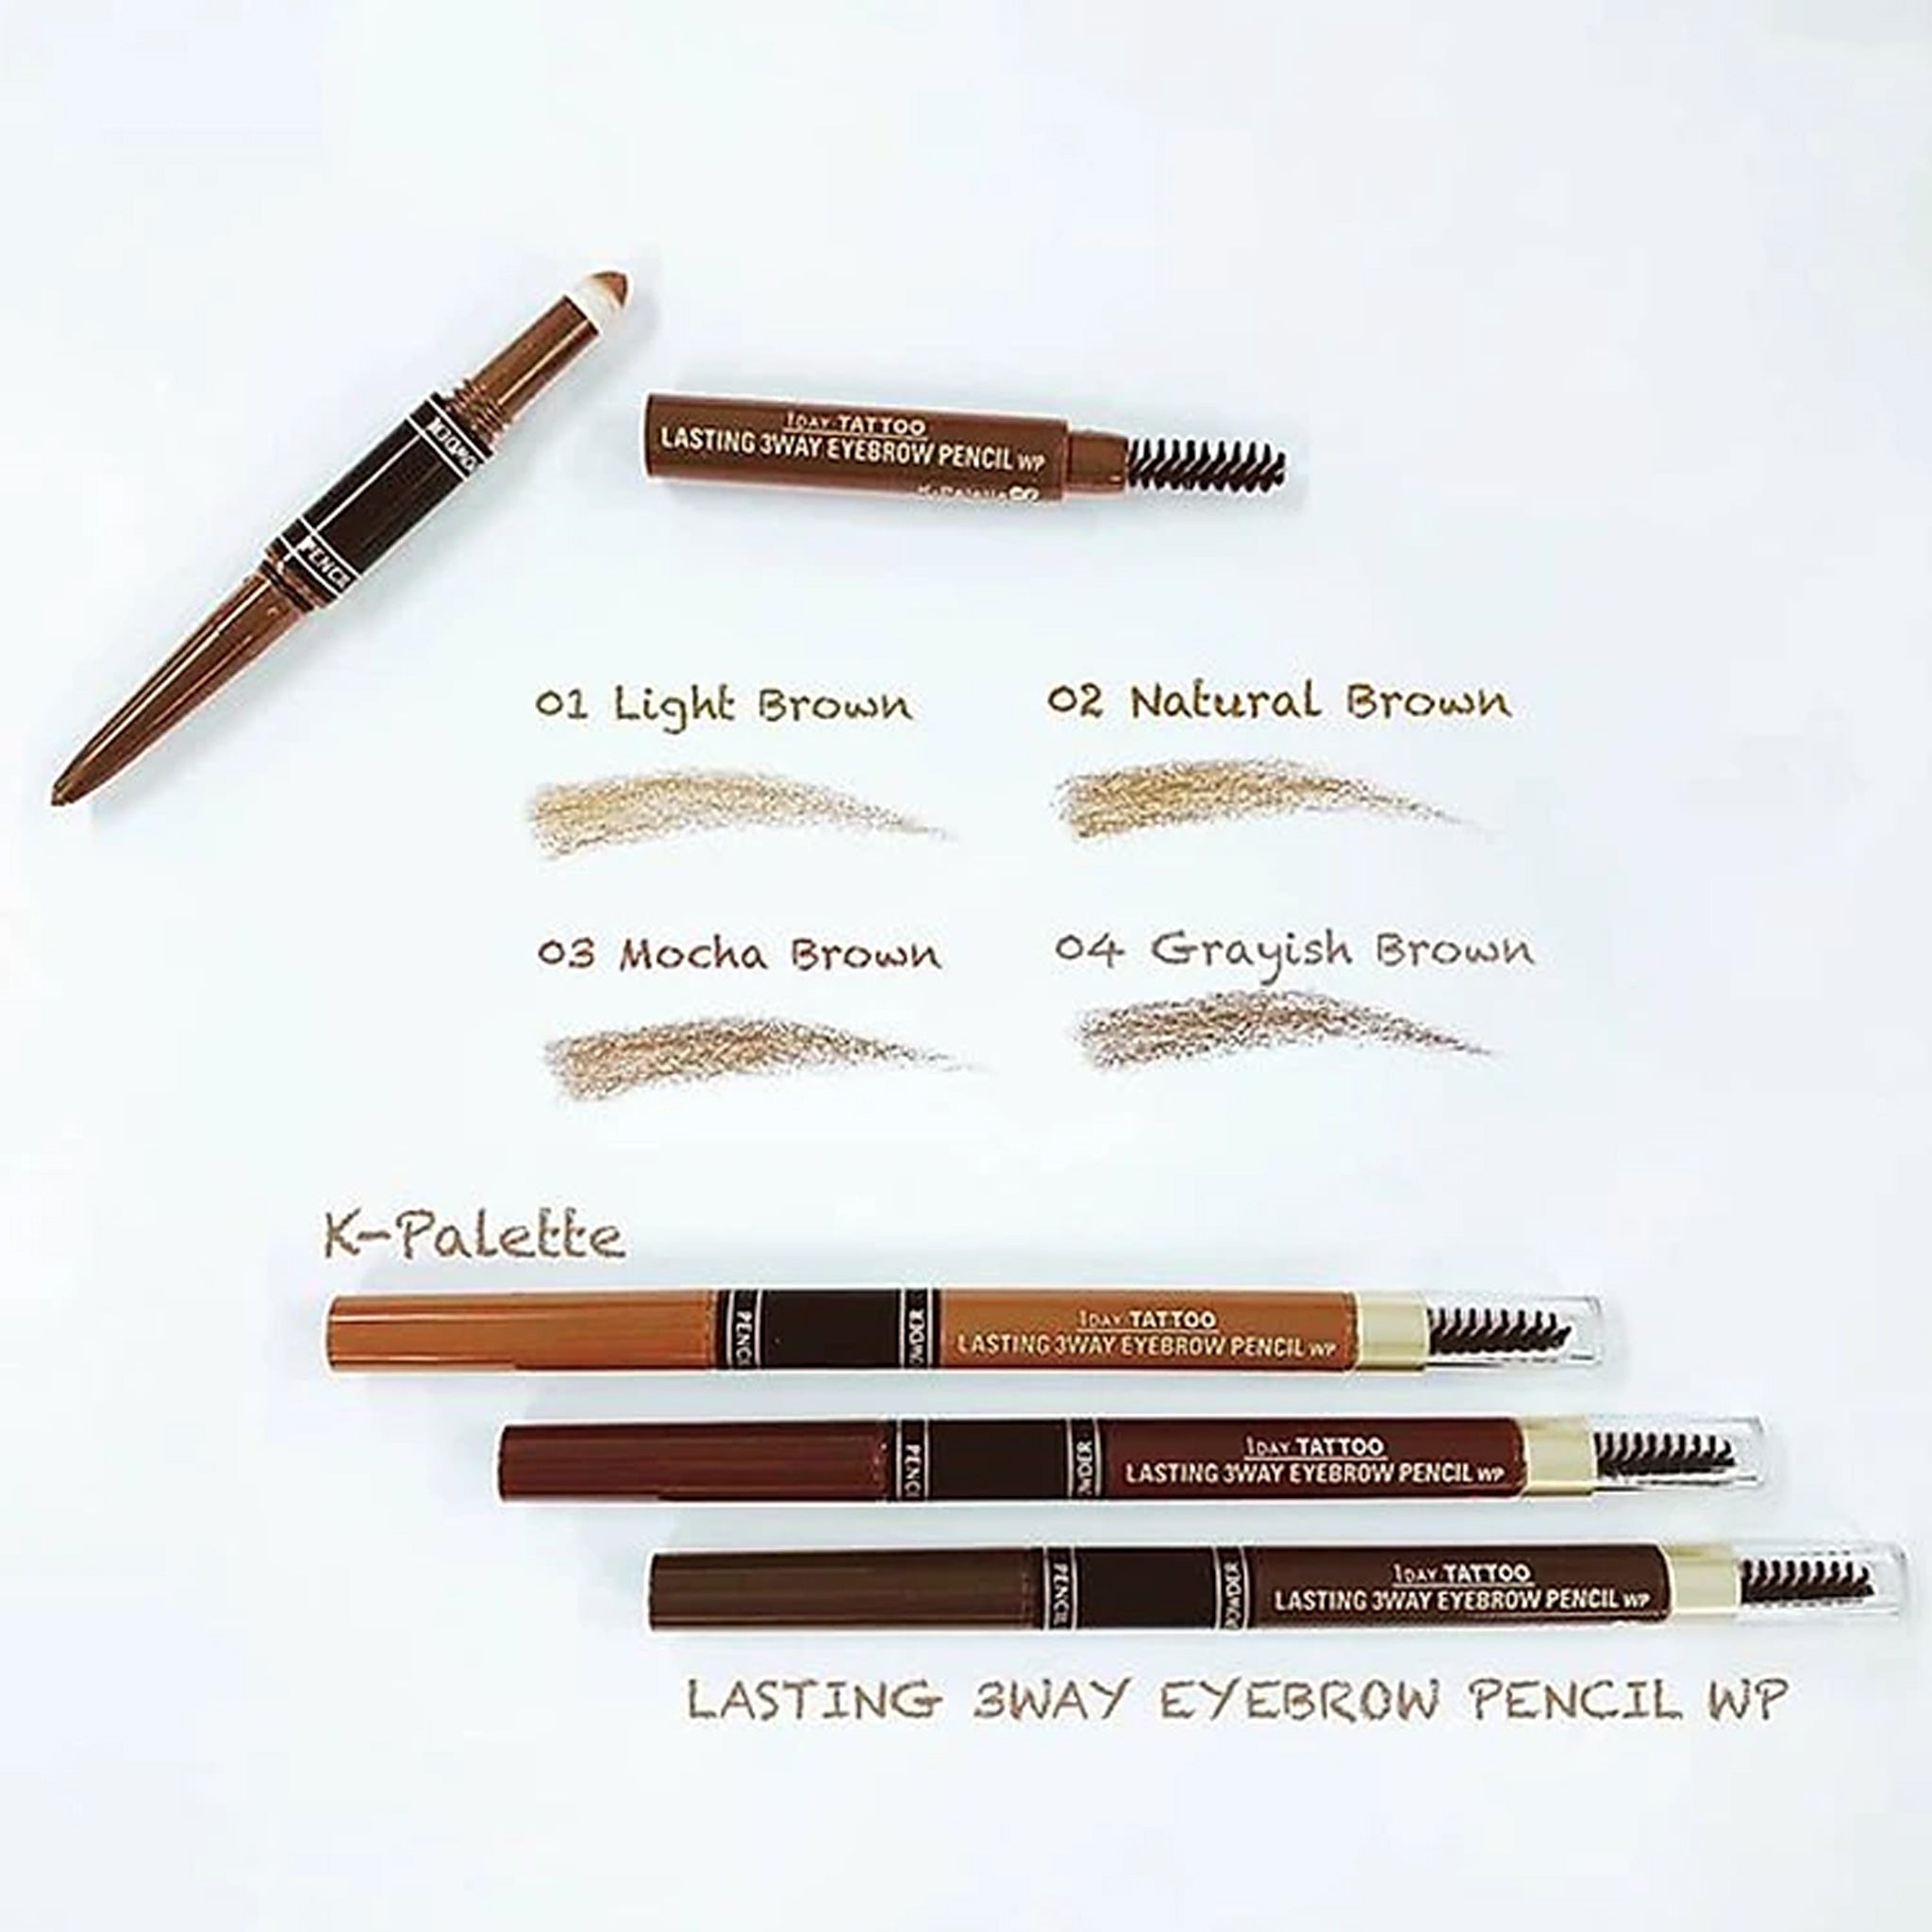 K-Palette 1 Day TATTOO Eyebrow Pencil